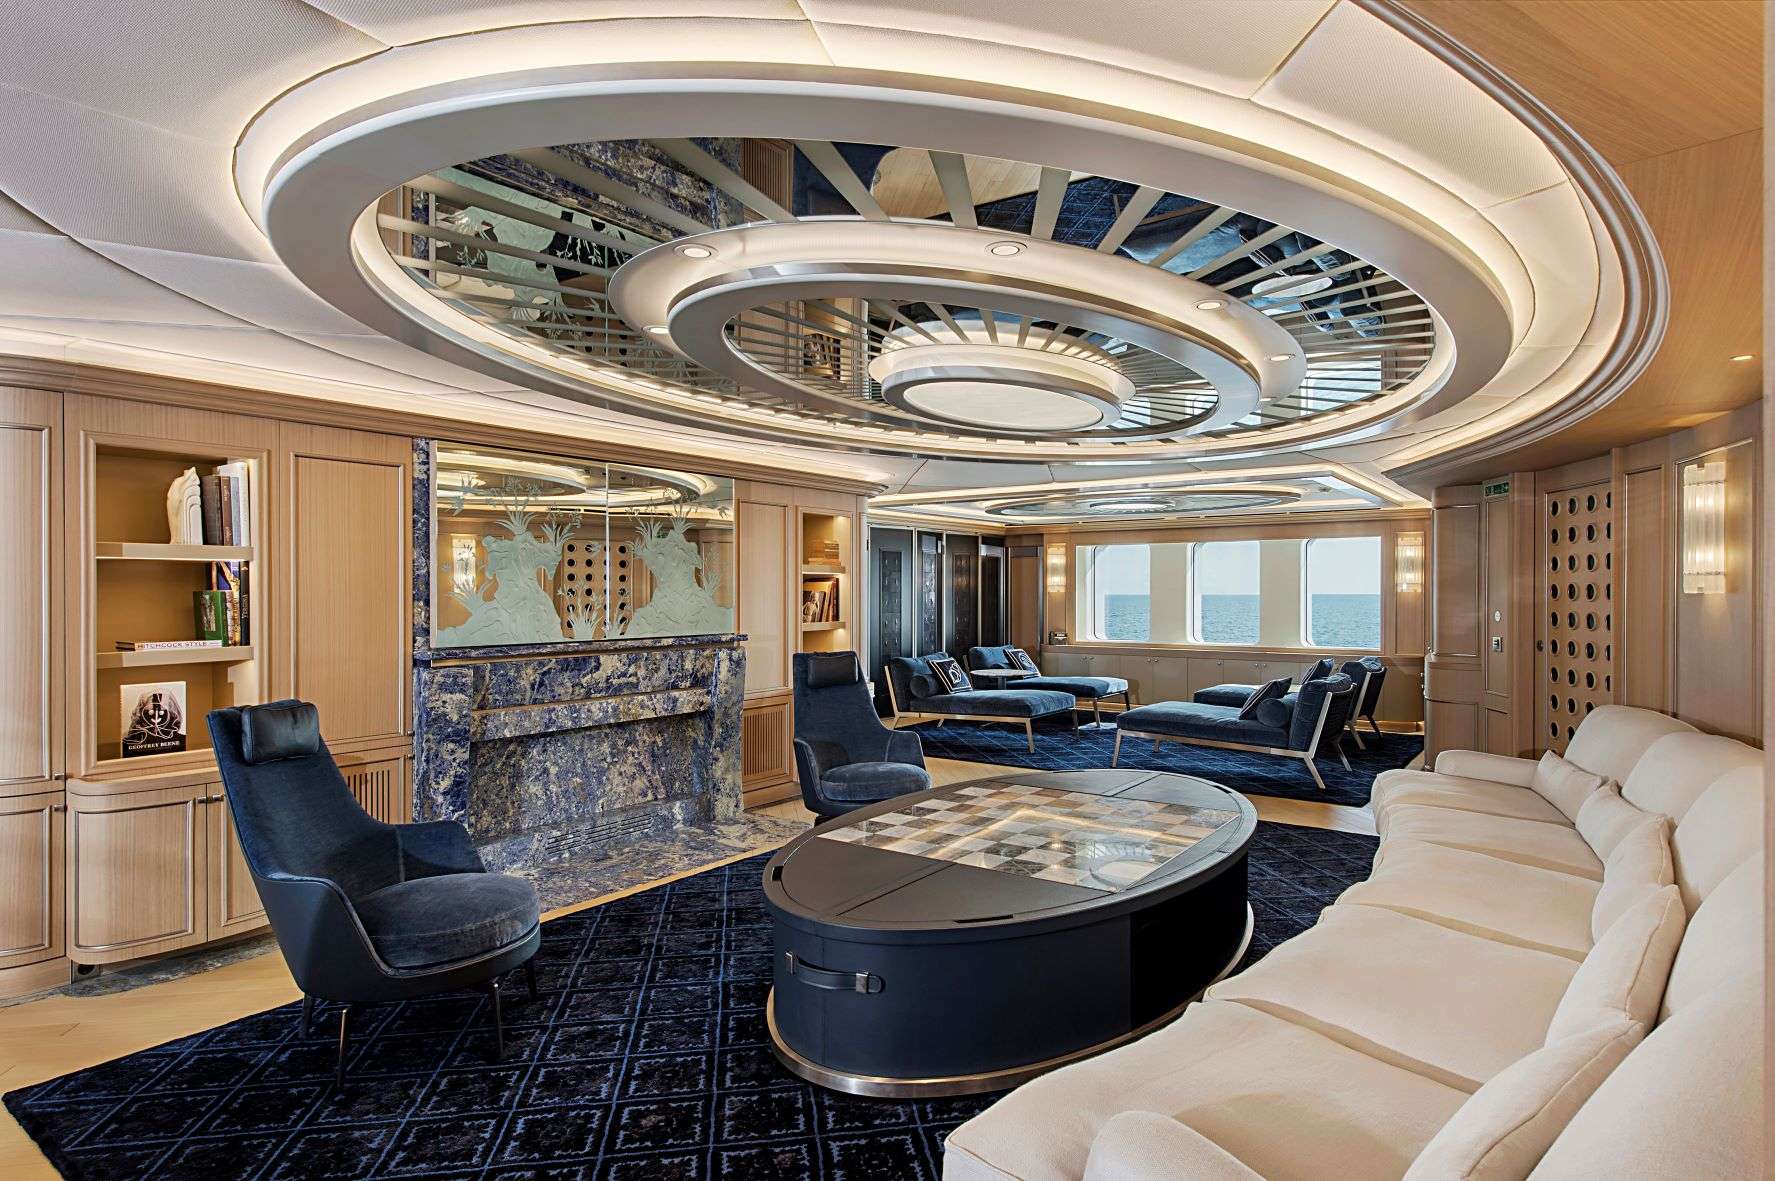 DREAM - Superyacht charter worldwide & Boat hire in Riviera, Cors, Sard, Italy, Spain, Turkey, Croatia, Greece 2